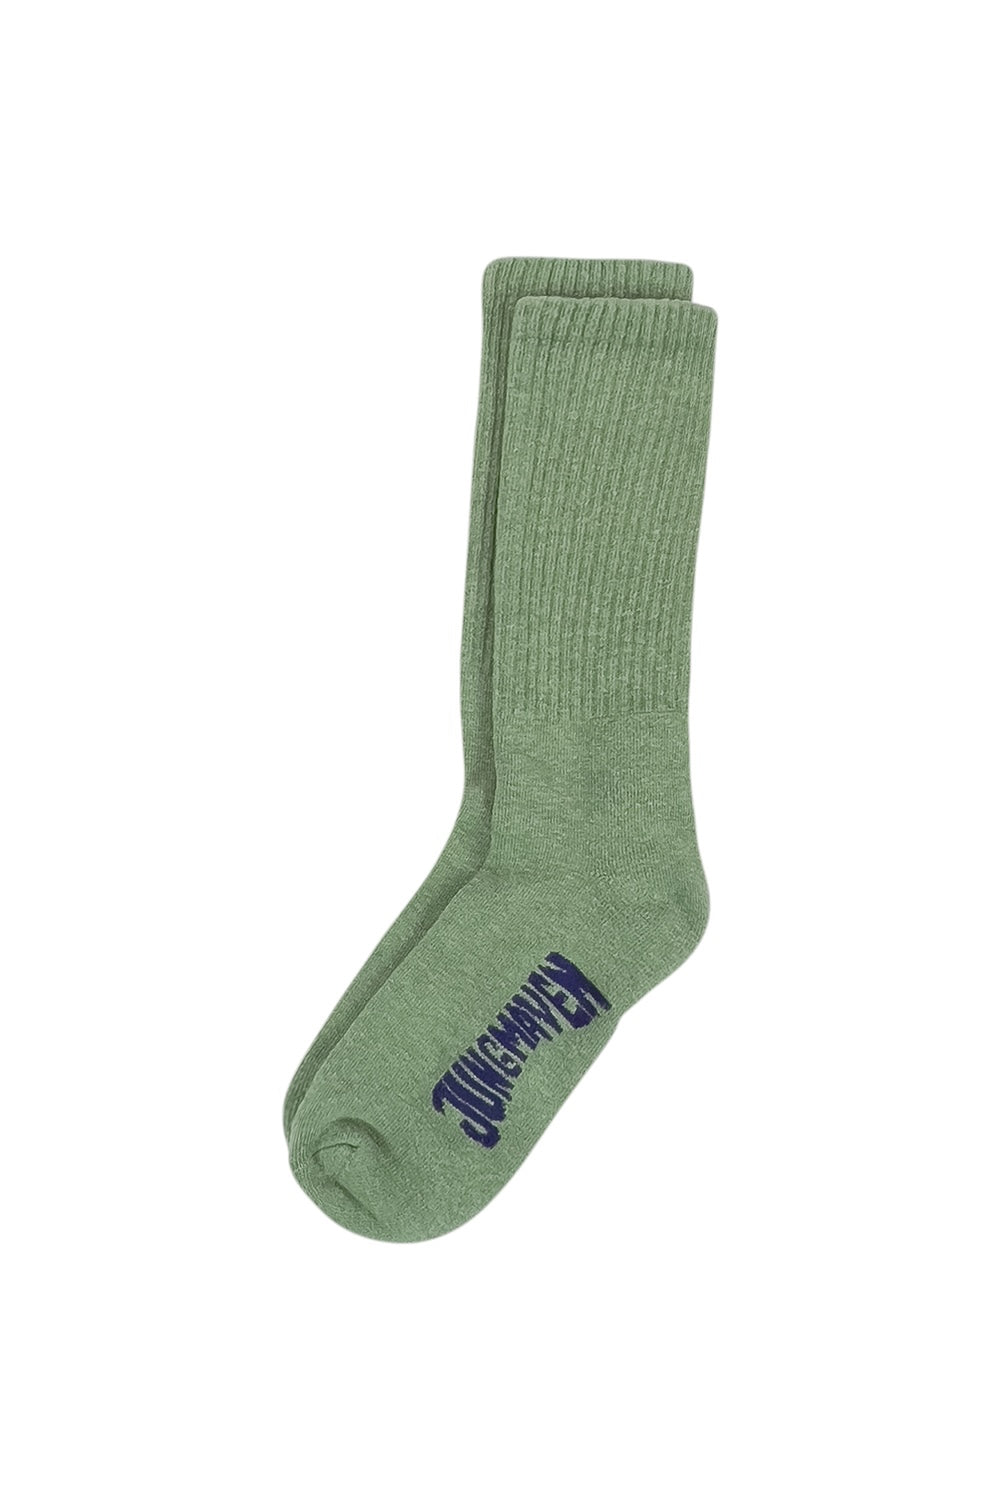 Hemp Wool Crew Socks | Jungmaven Hemp Clothing & Accessories / Color: Pistachio Green